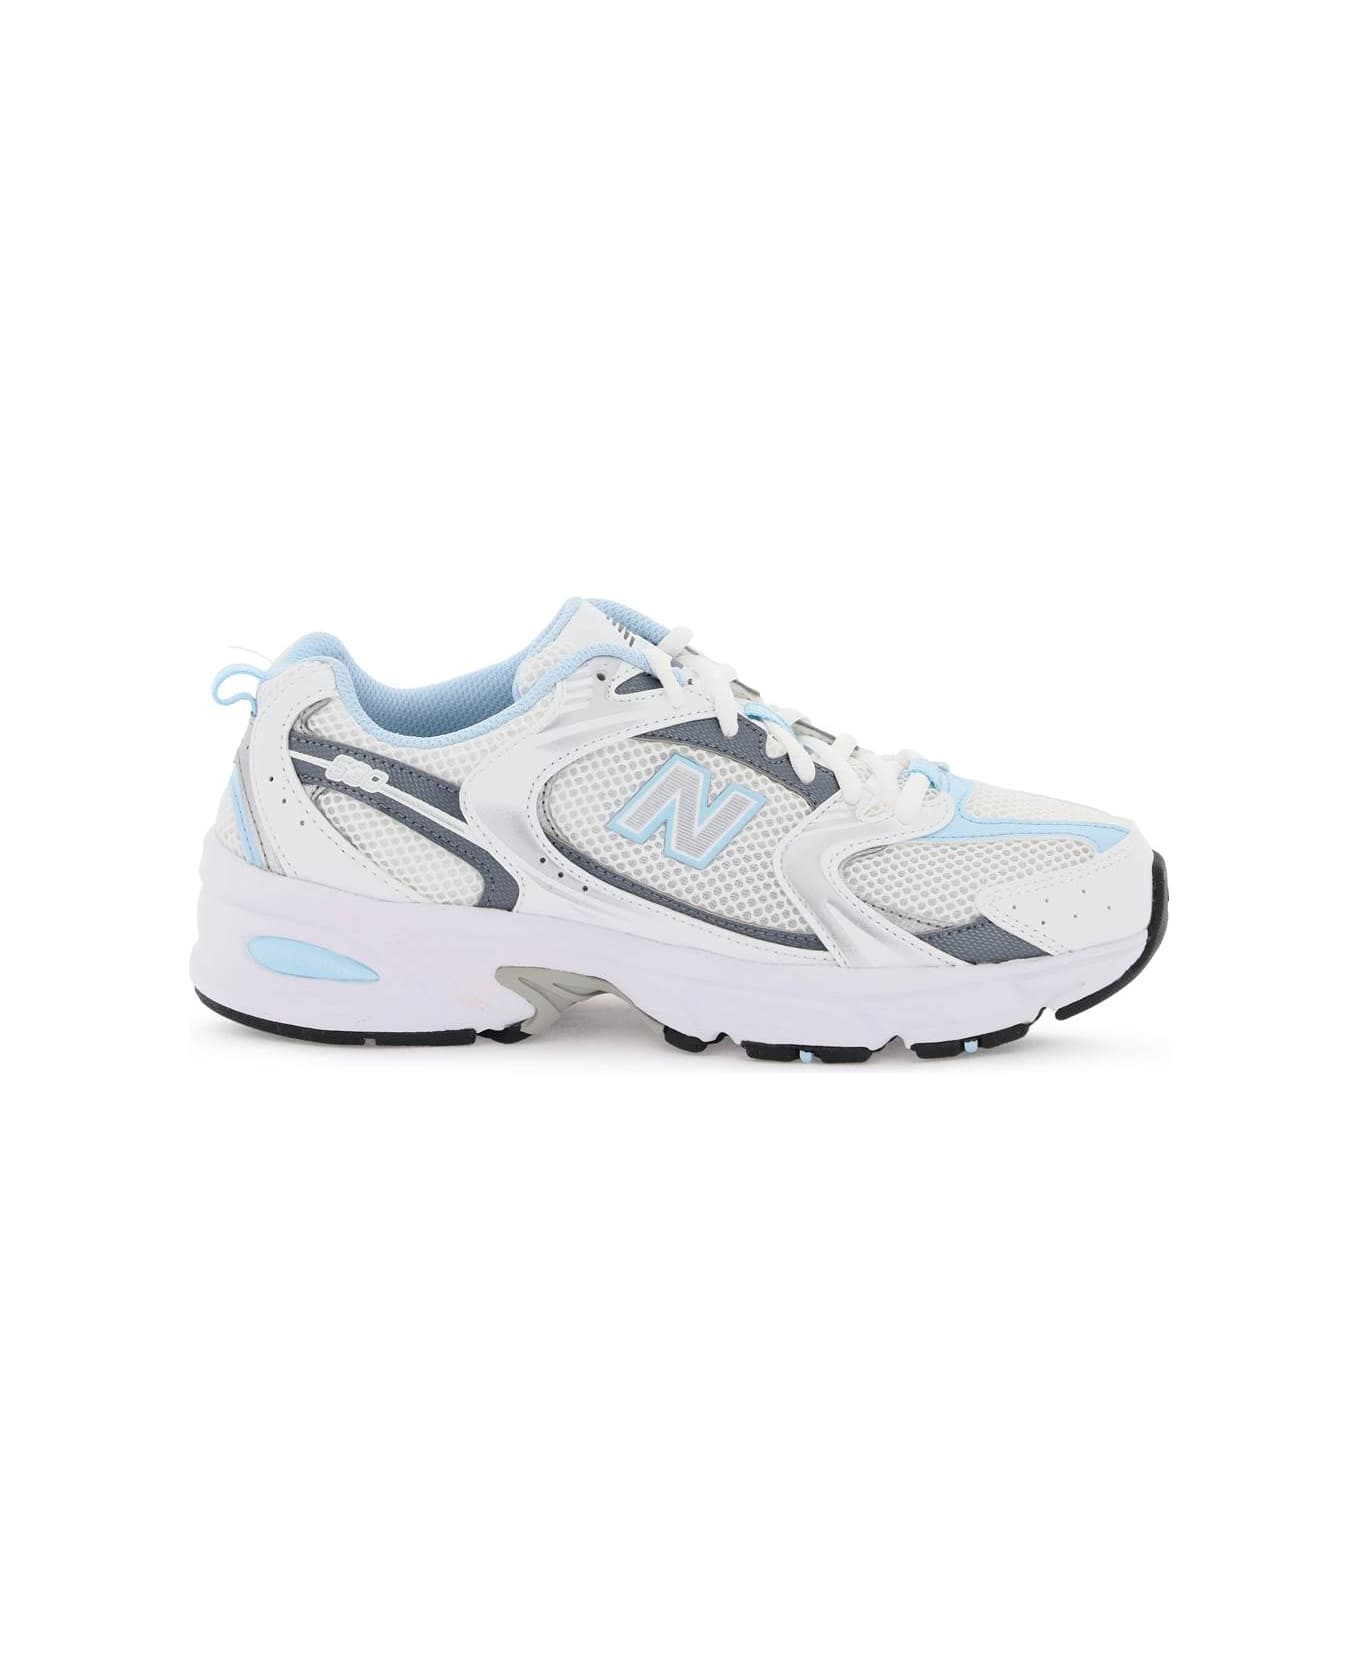 New Balance 530 Sneakers - WHITE LILAC DARK GREY (Silver)